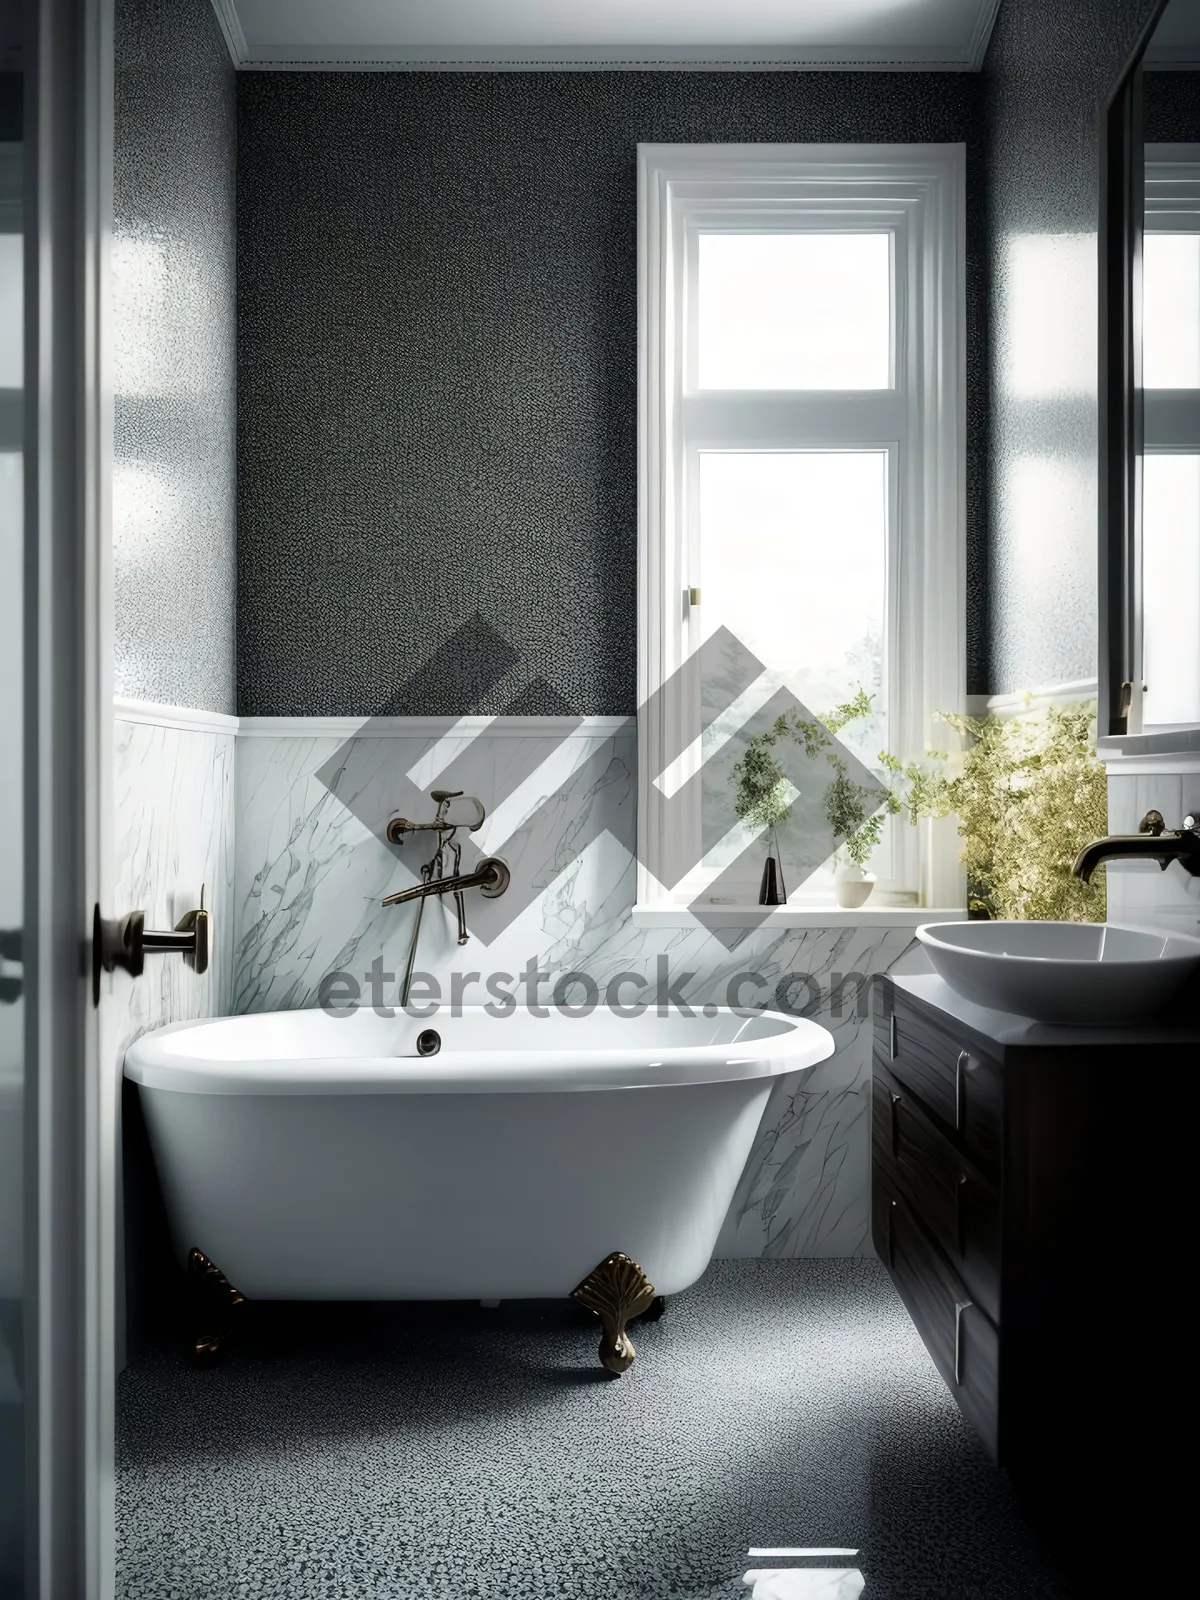 Picture of Elegant Modern Bathroom with Luxury Fixtures